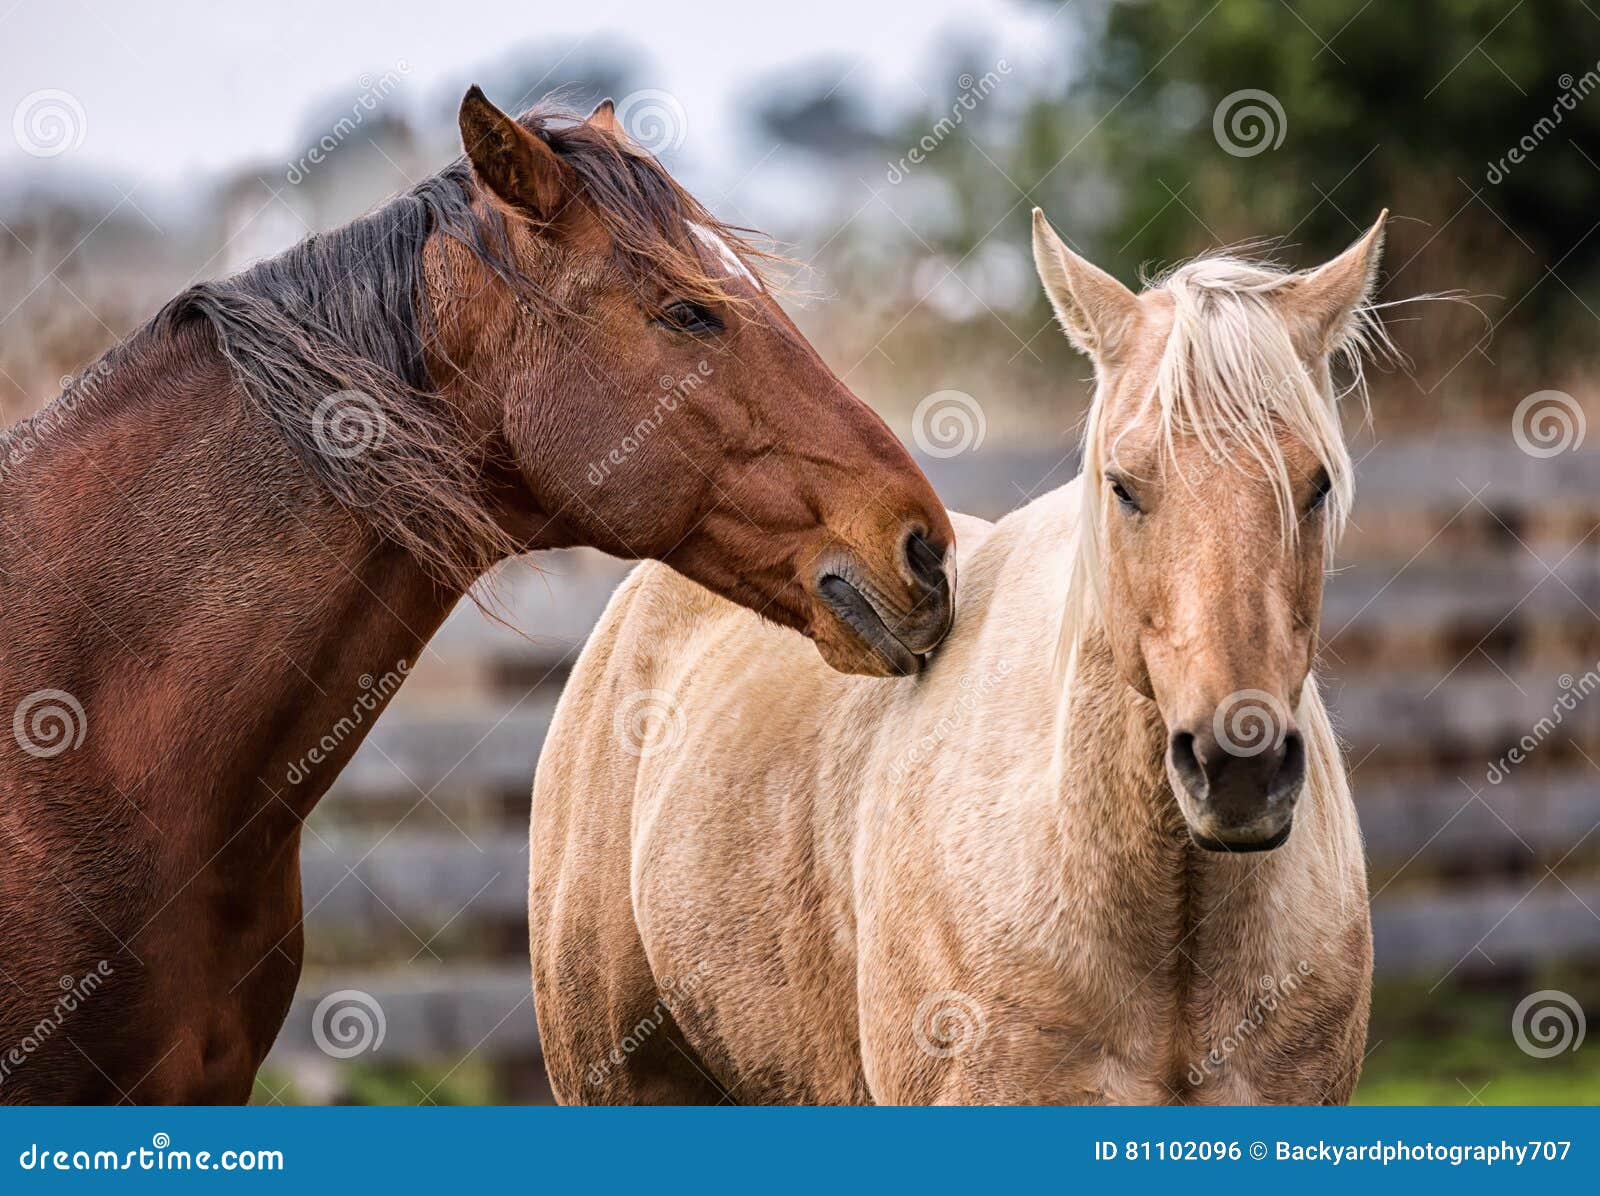 horses at a farm in northern californa